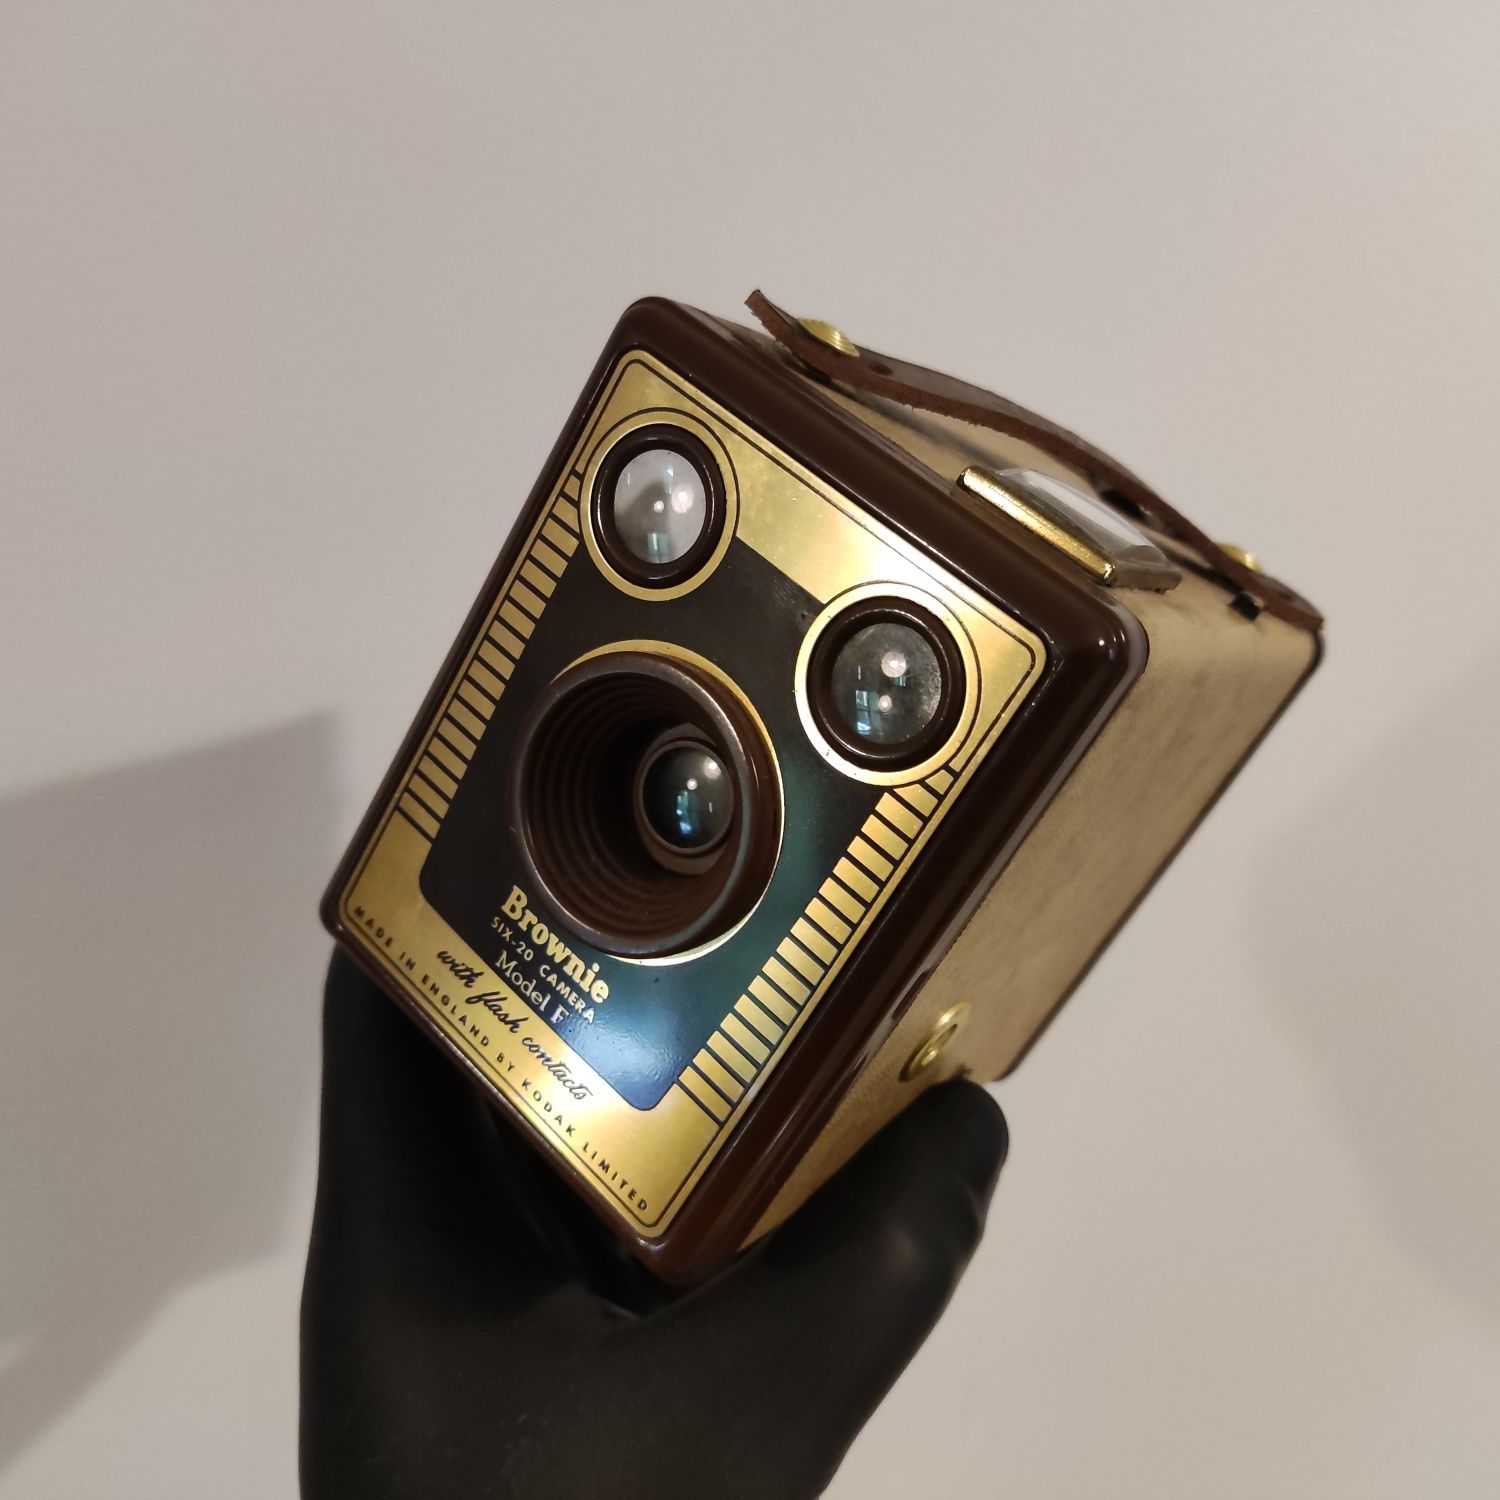 Máquina fotográfica Kodak Brownie SIX-20 model F box camera